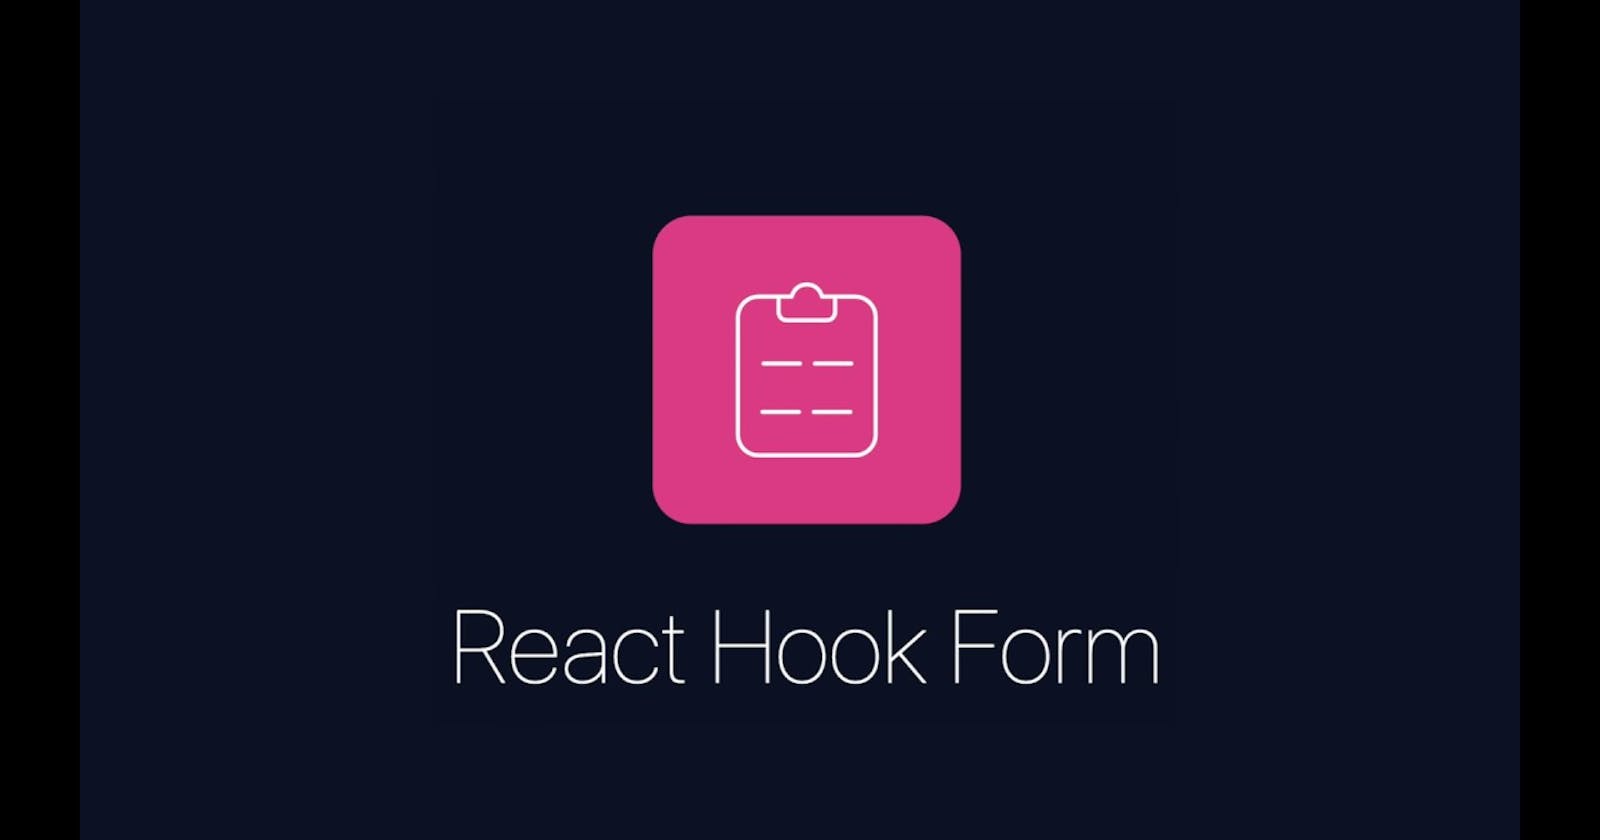 Form validation using React-Hook-Form